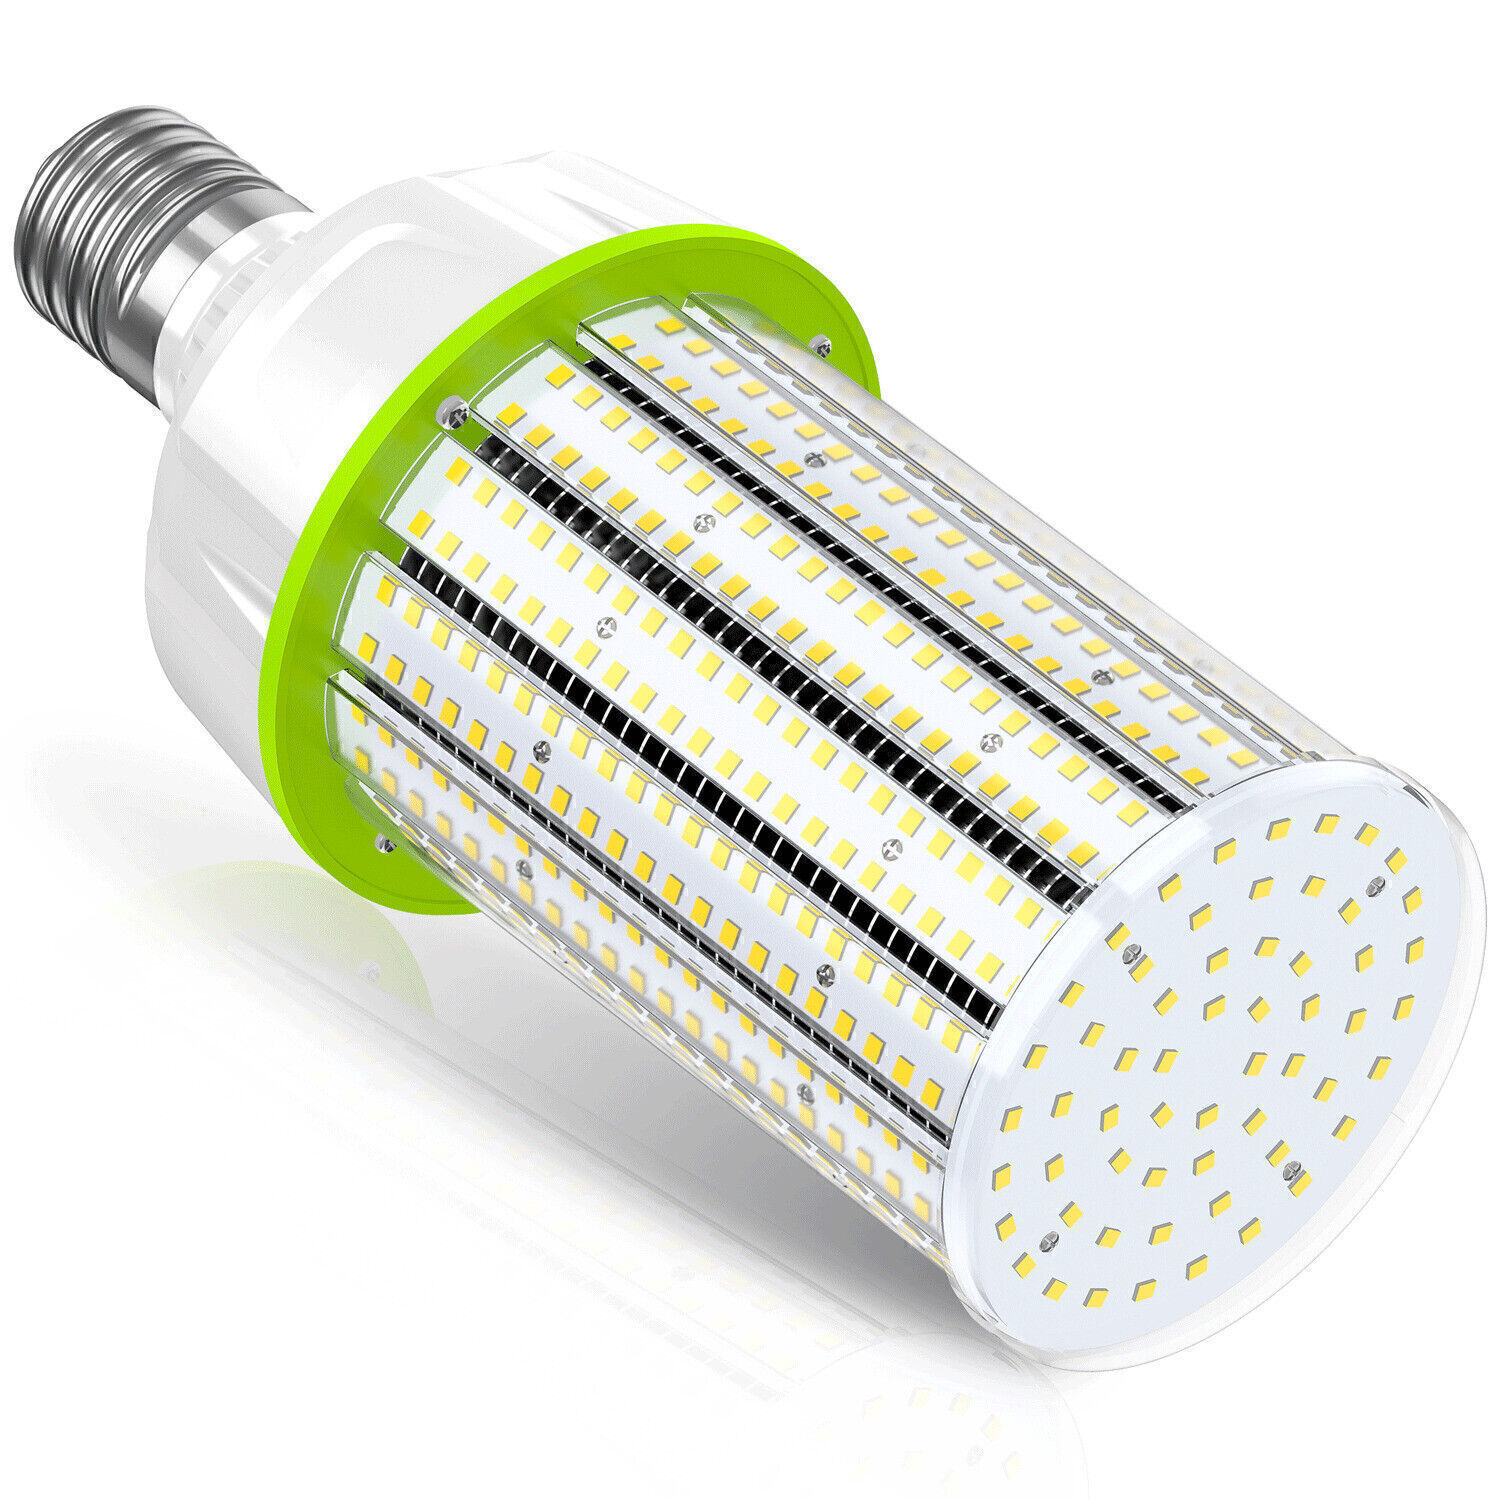 80 Watt LED Corn Light Bulb, E39 Mogul Base 5000K Warehouse Shop Light 12000LM